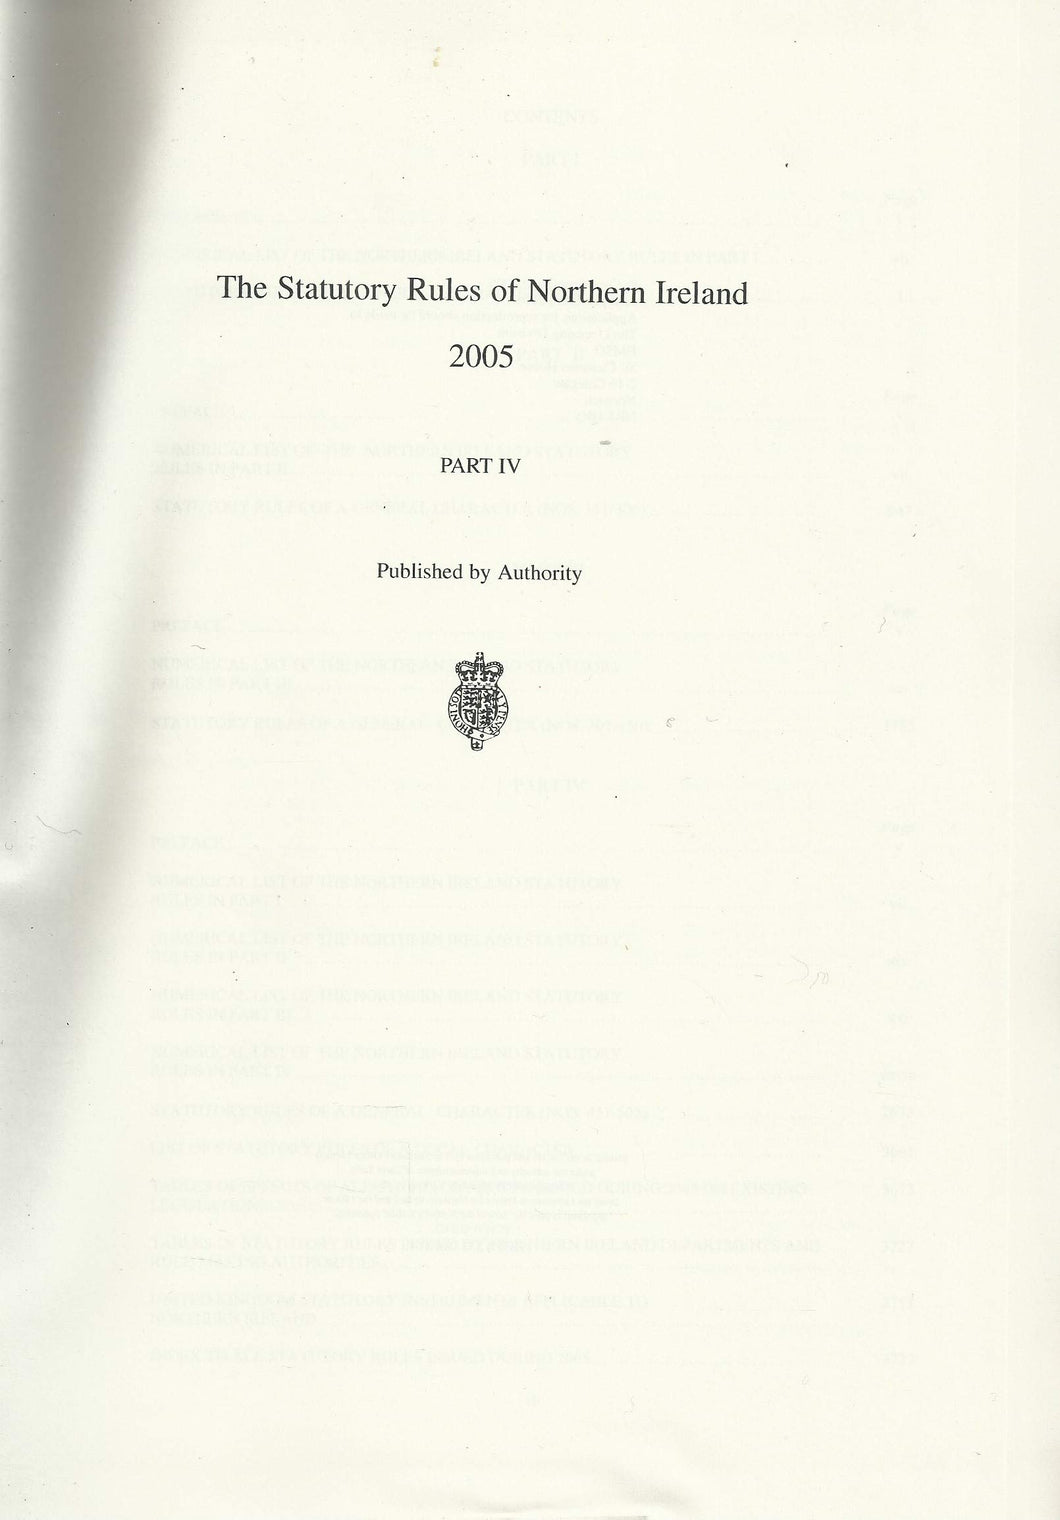 Northern Ireland Statutory Rules 2005, Part IV (Part 4) - The Statutory Rules of Northern Ireland